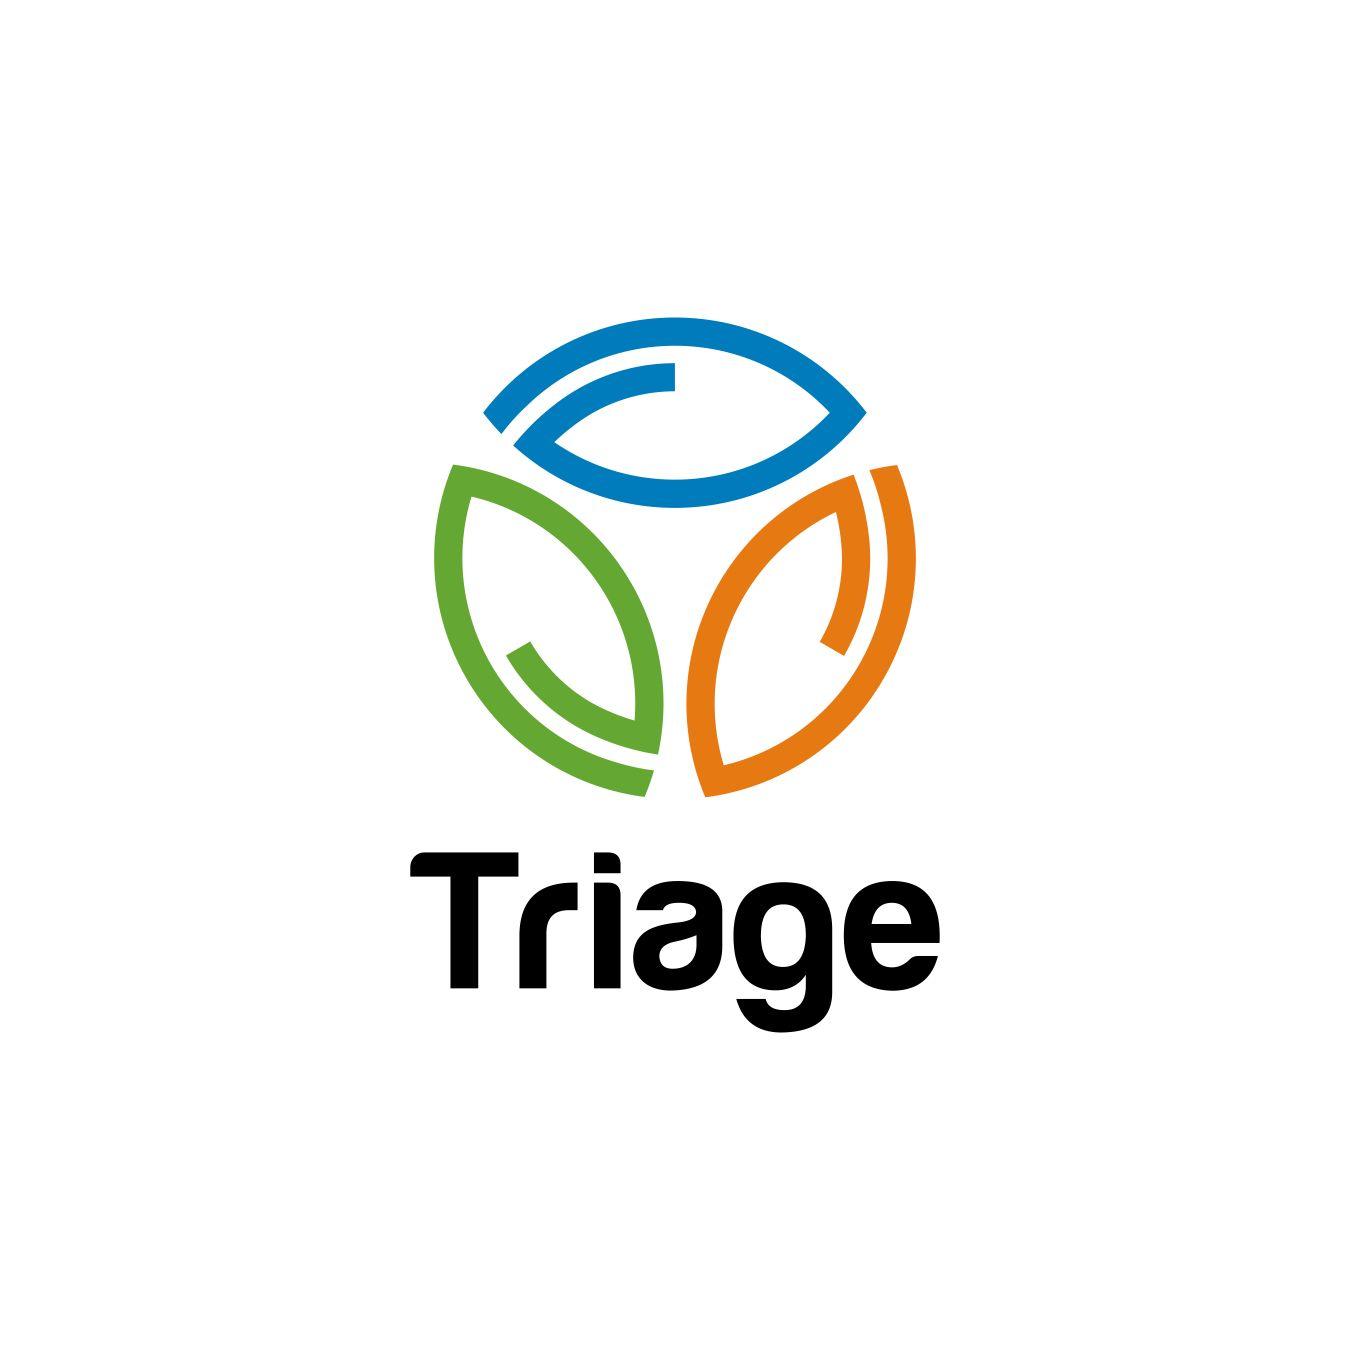 Triage Logo - Triage